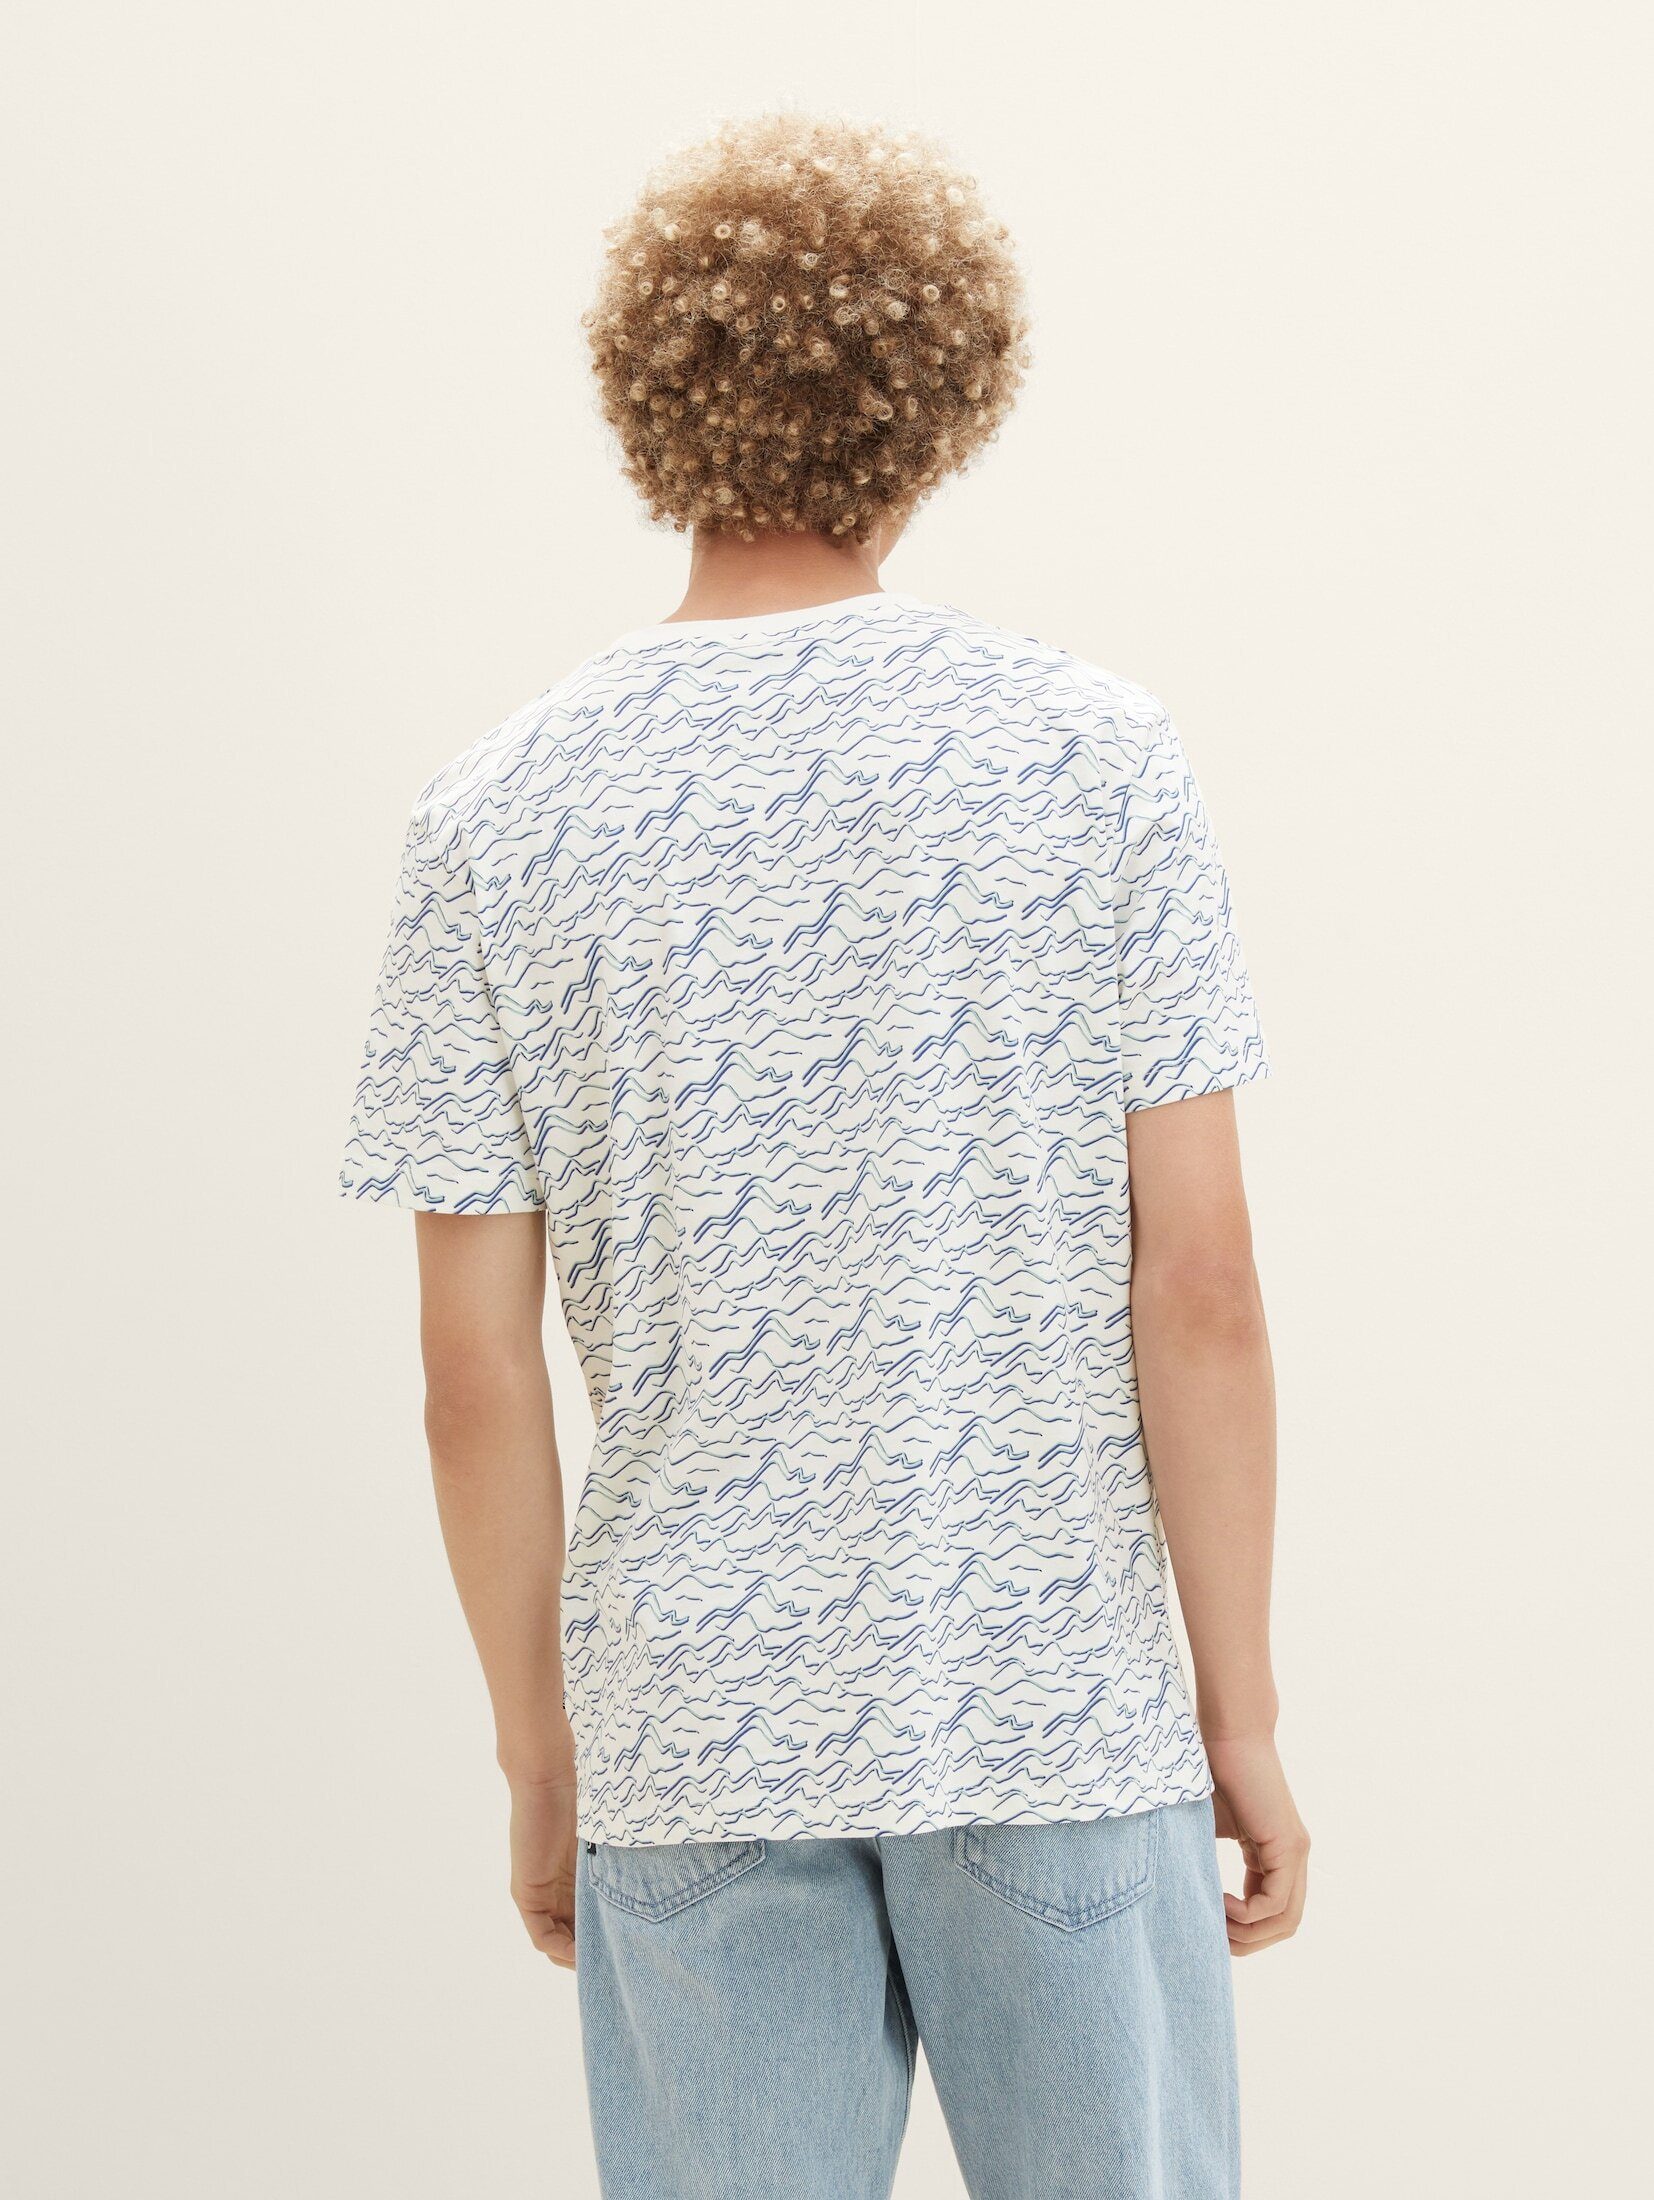 TOM TAILOR print white Allover-Print Denim T-Shirt mit abstract T-Shirt mountain